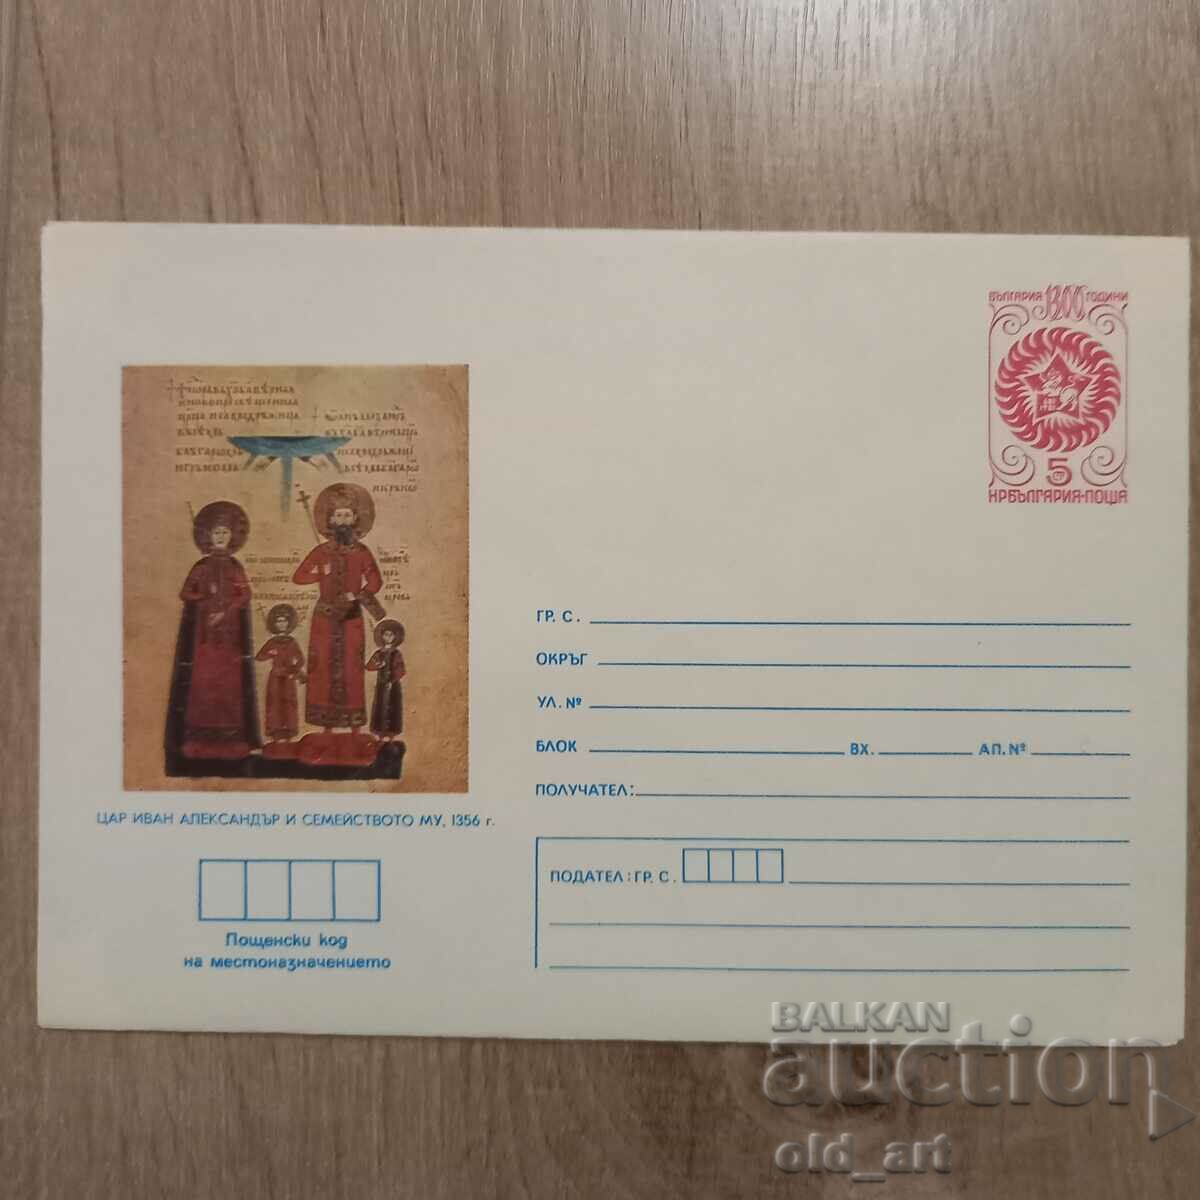 Plic poștal - Țarul Ivan Alexandru și familia sa